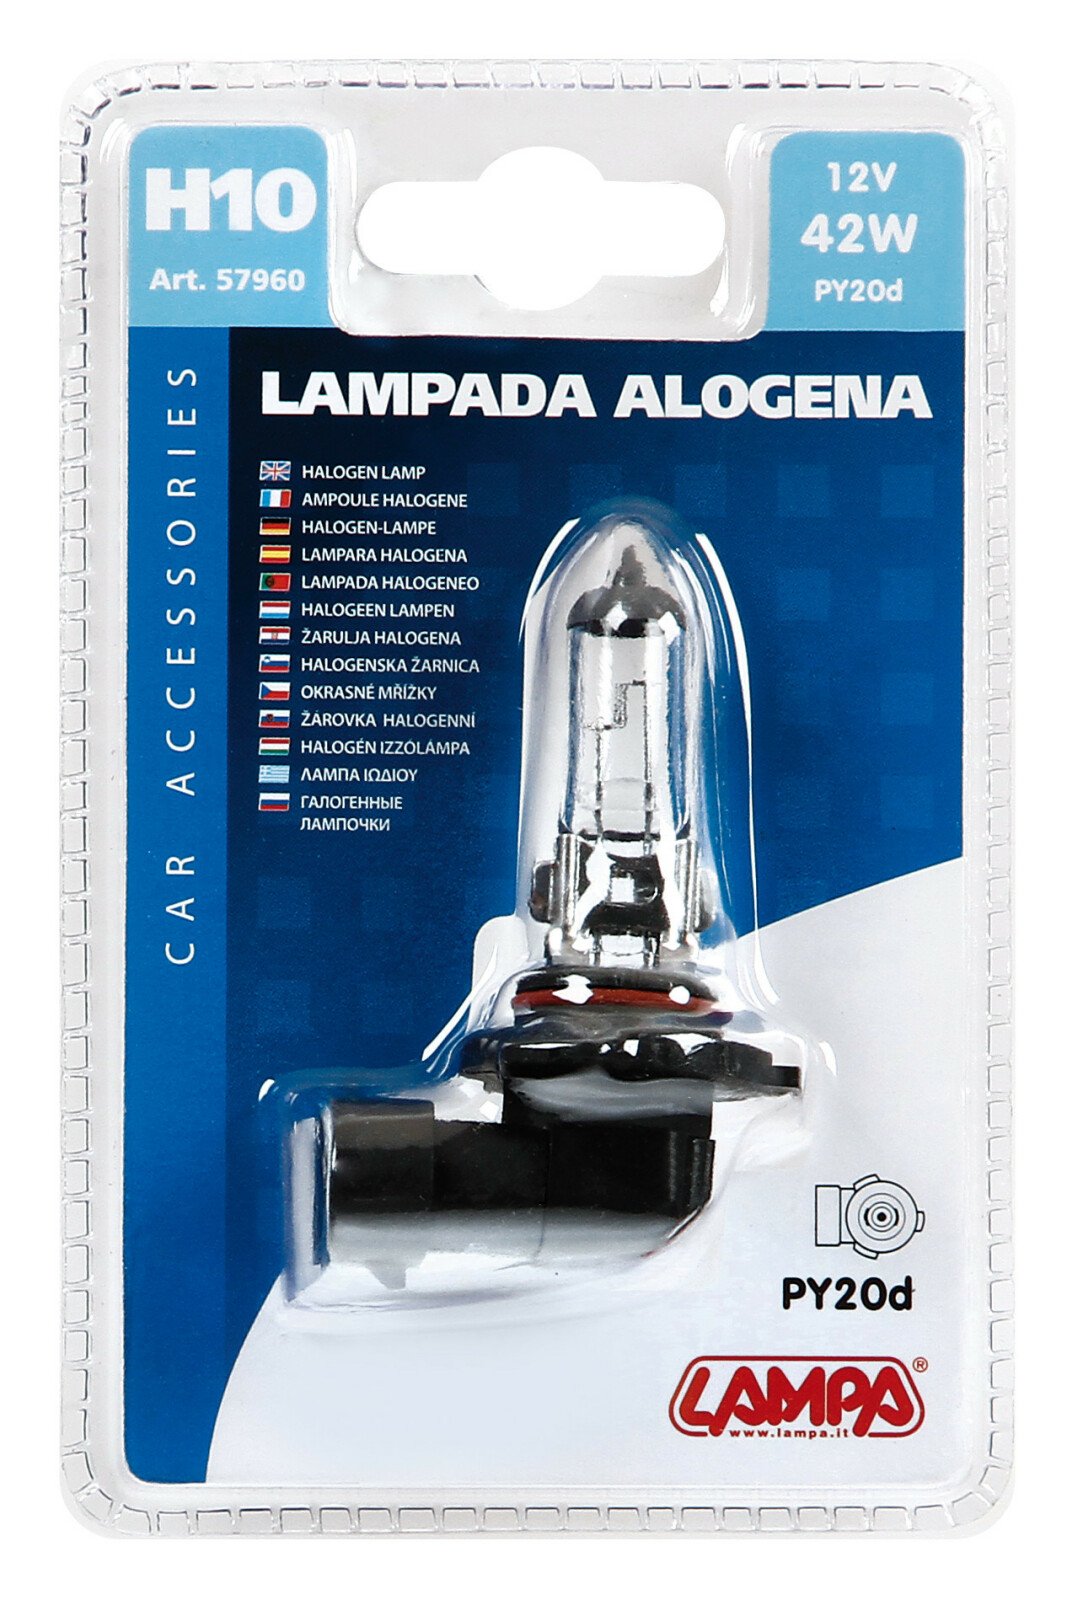 12V - H10 - 42W - PY20d 1pcs Lampa thumb